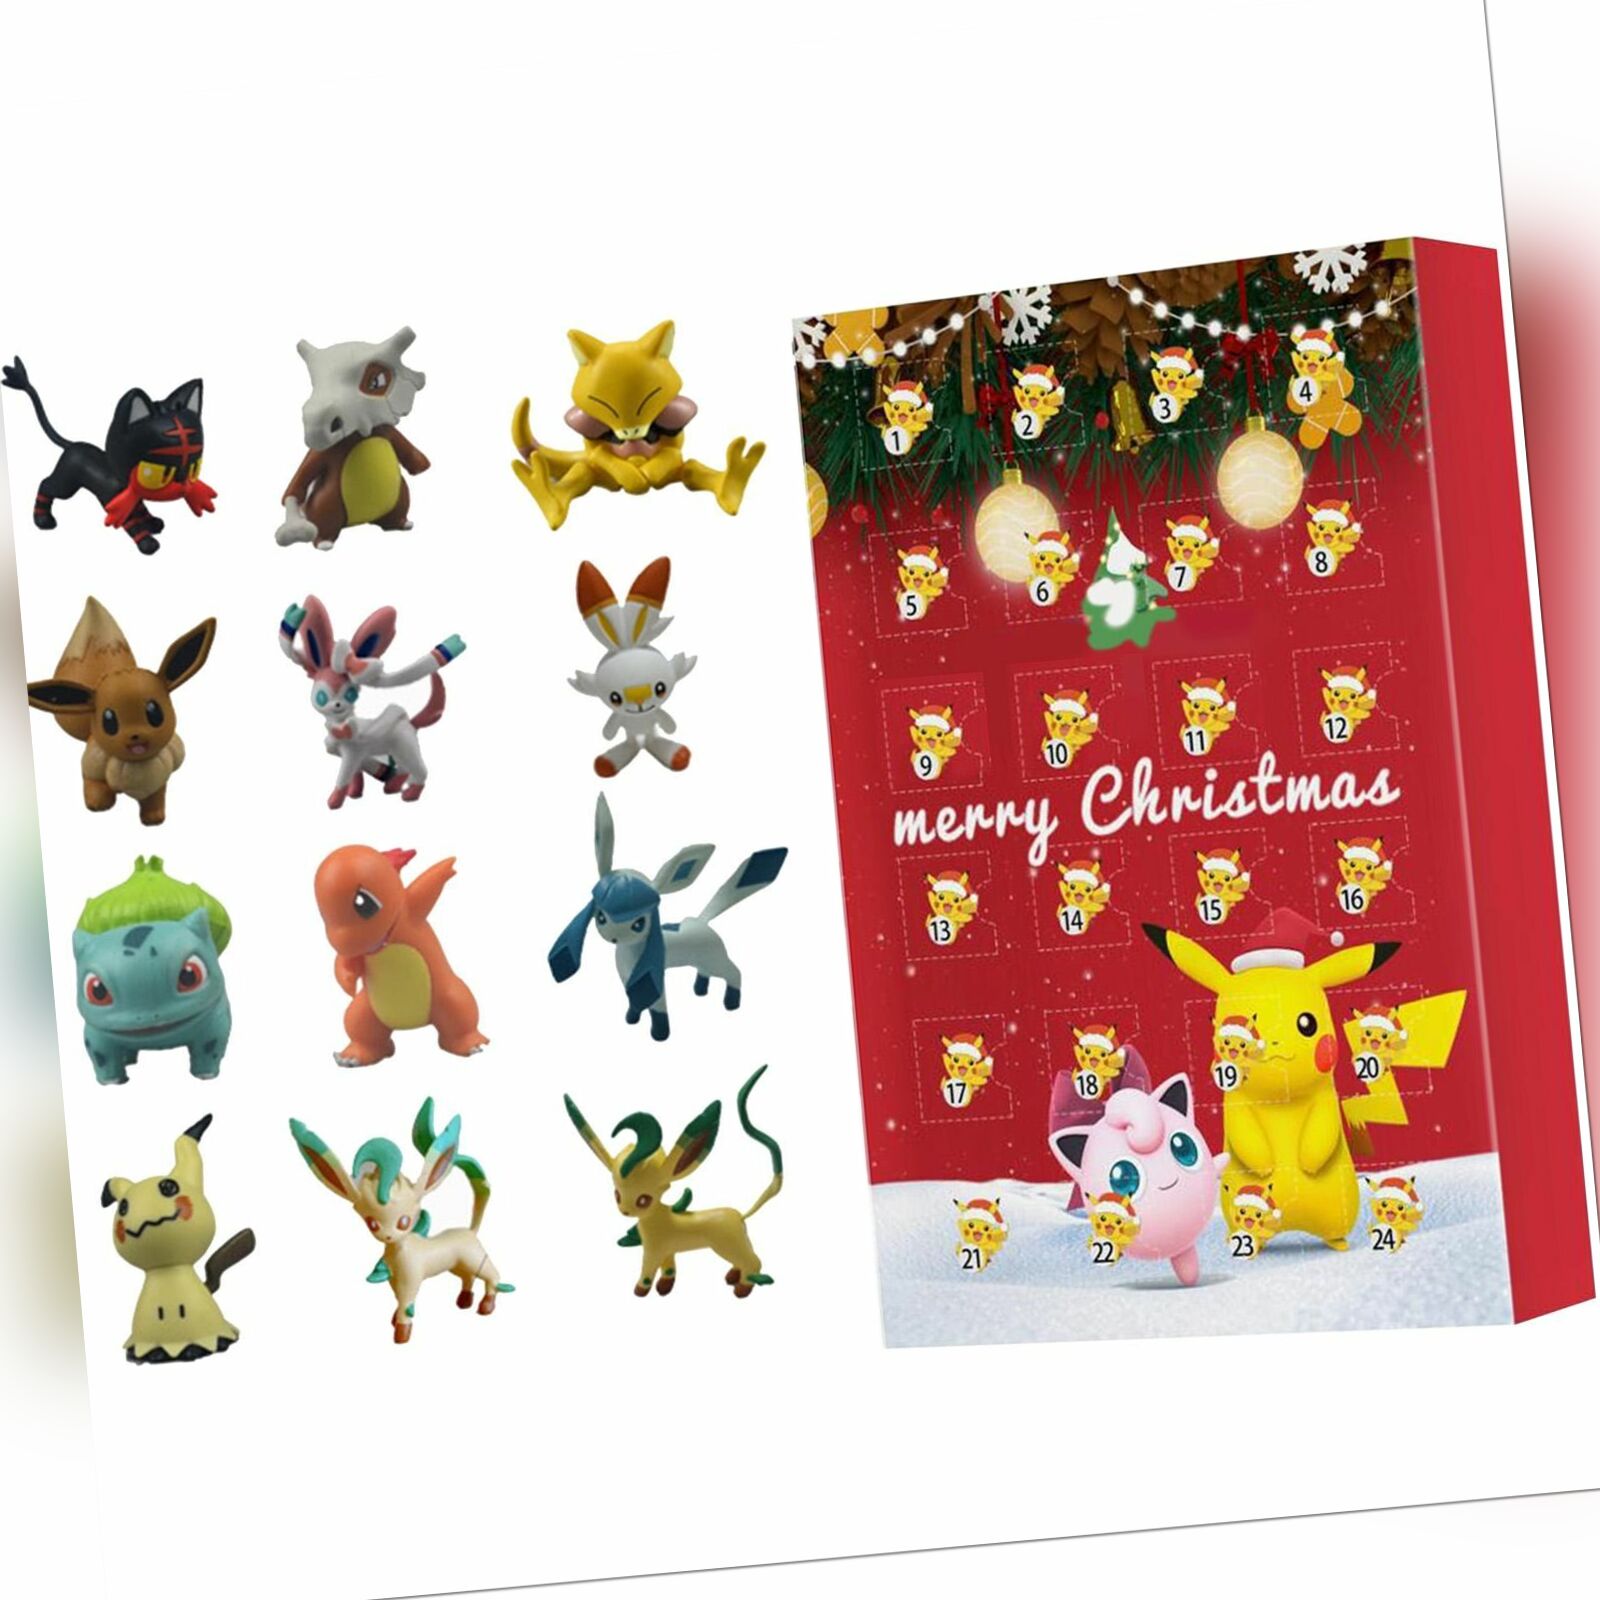 Neuer Pocket Monsters Weihnachts-Adventskalender 24 Tage / 24 Pokemons